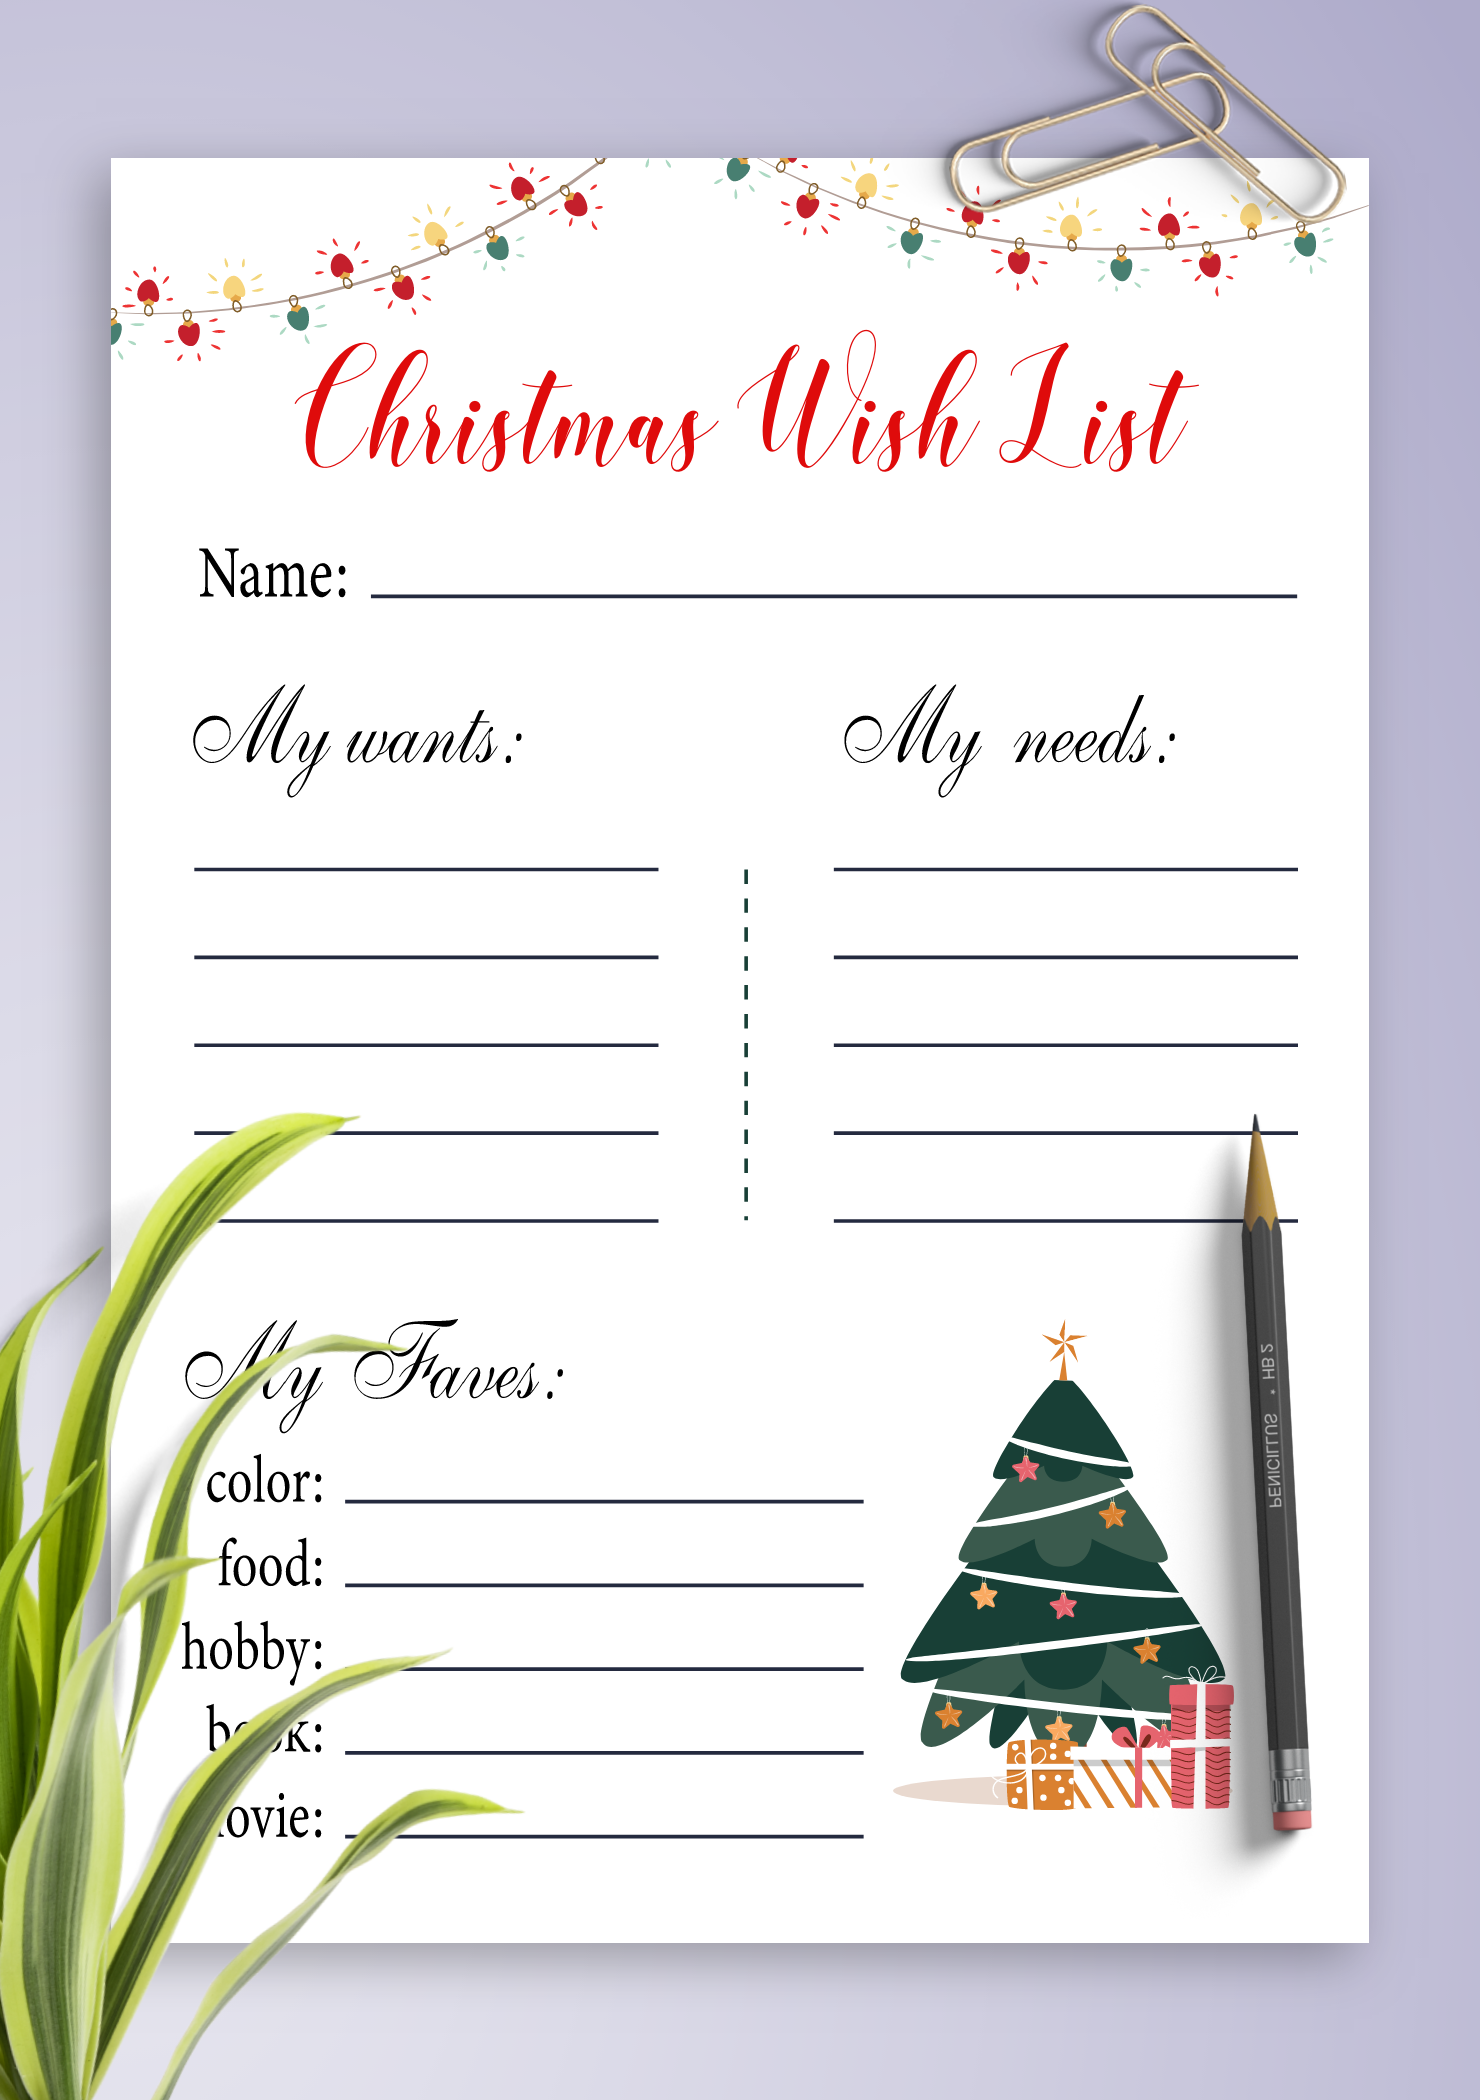 Printable Christmas Gift Wish List Template My Wish List Ubicaciondepersonas cdmx gob mx